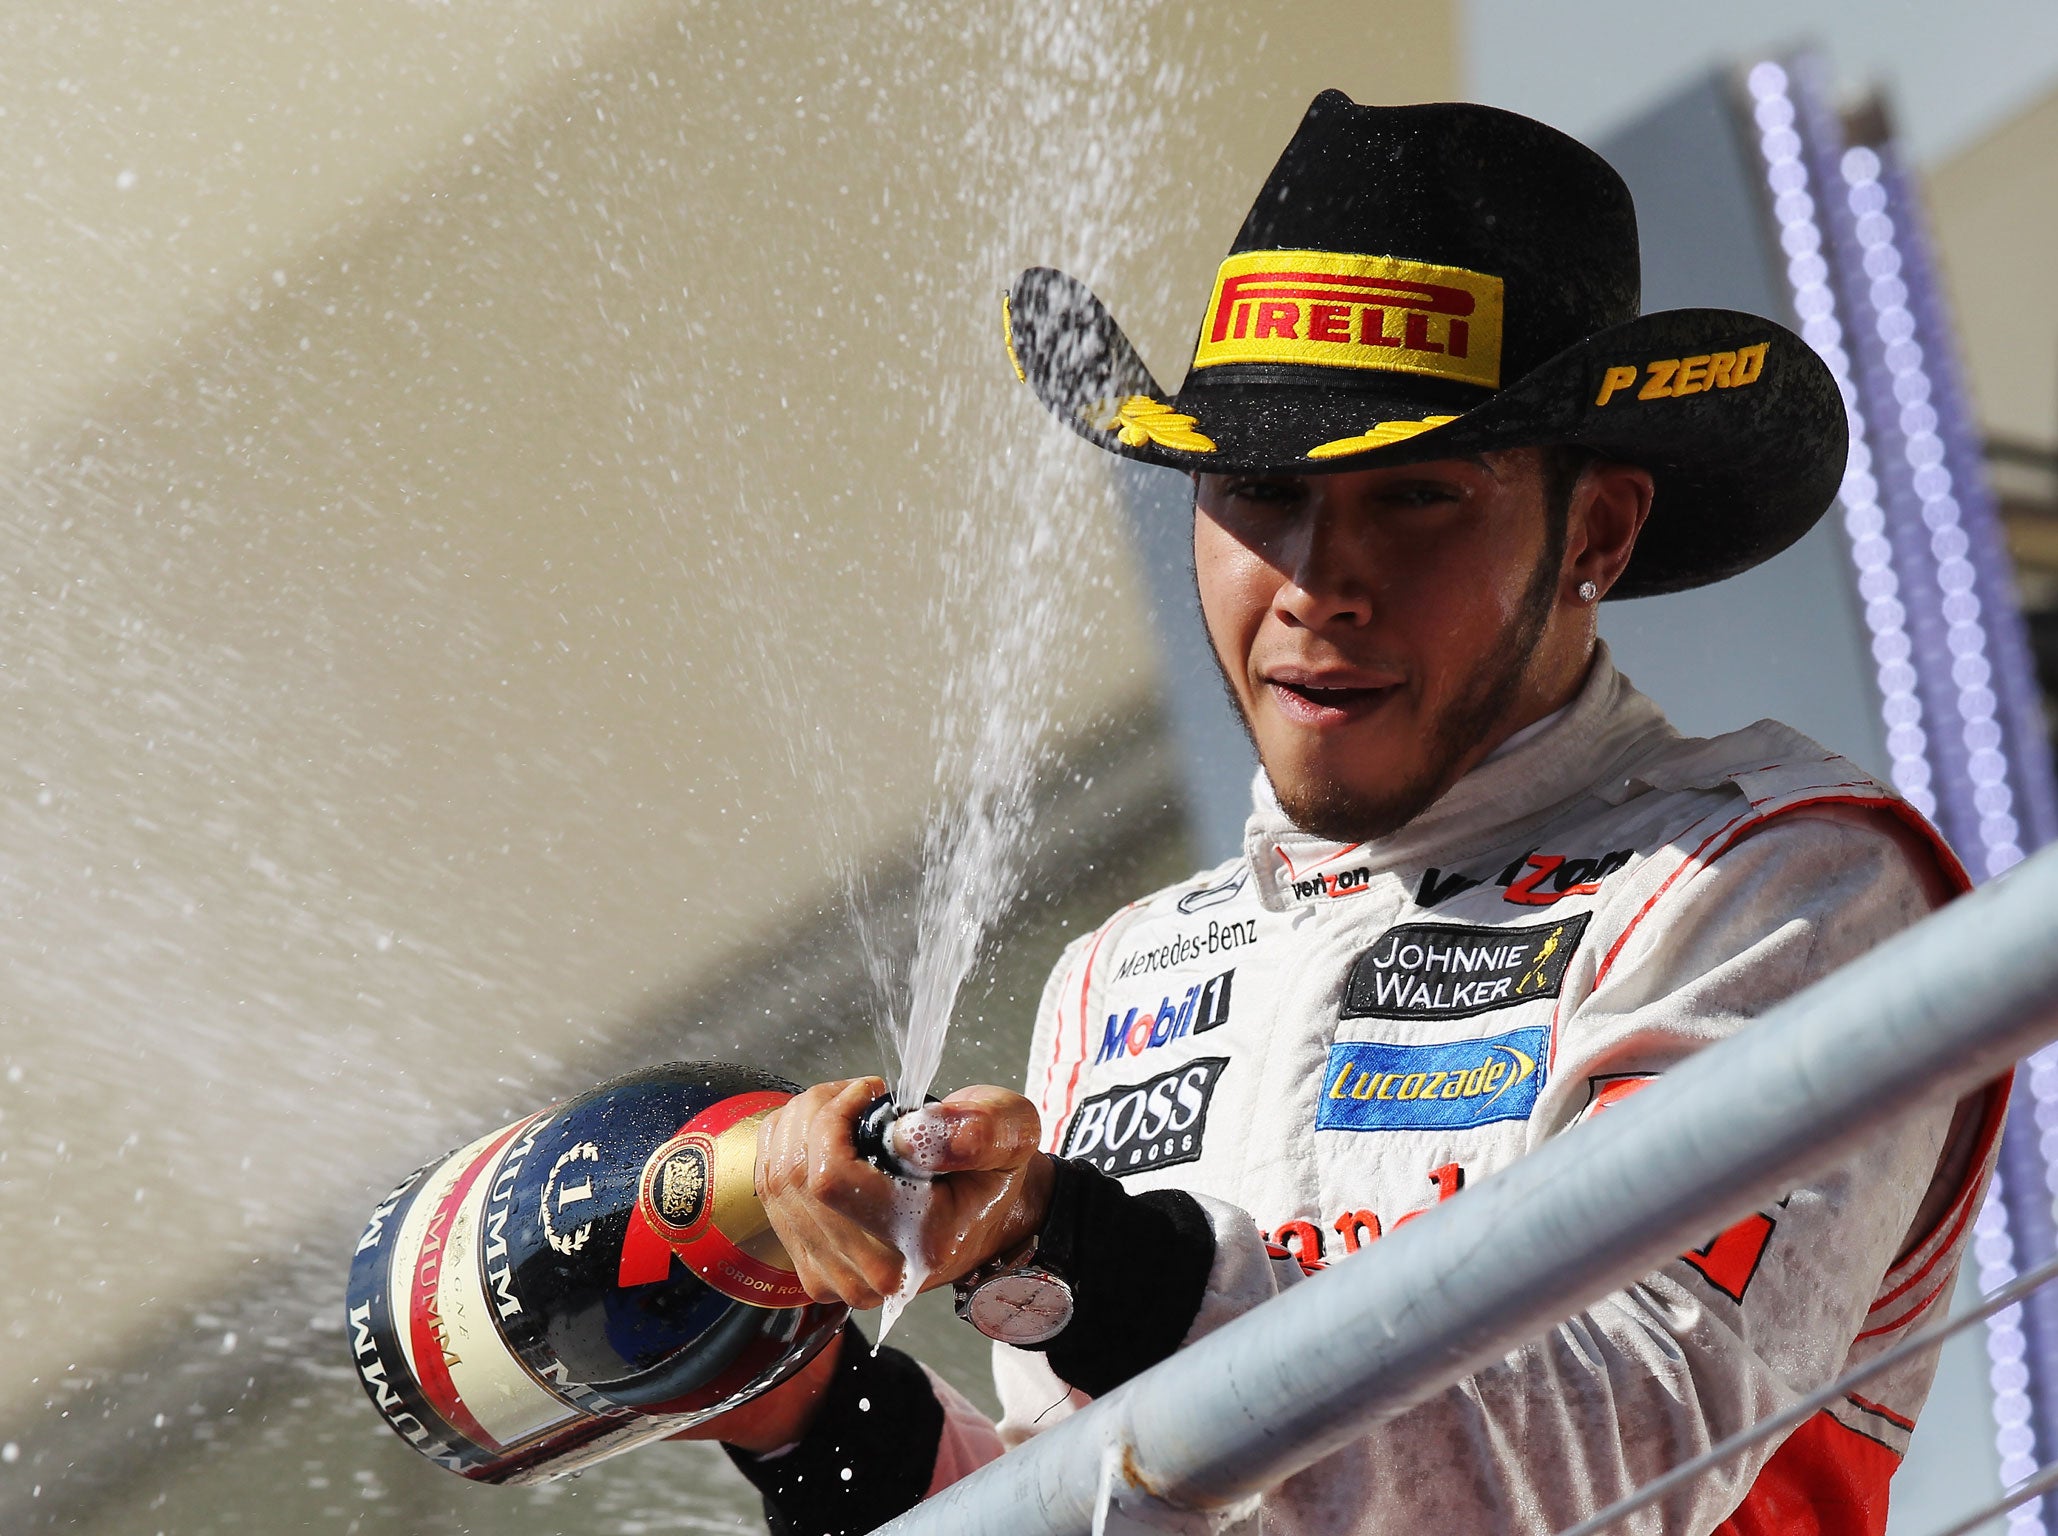 Lewis Hamilton celebrates his US Grand Prix victory